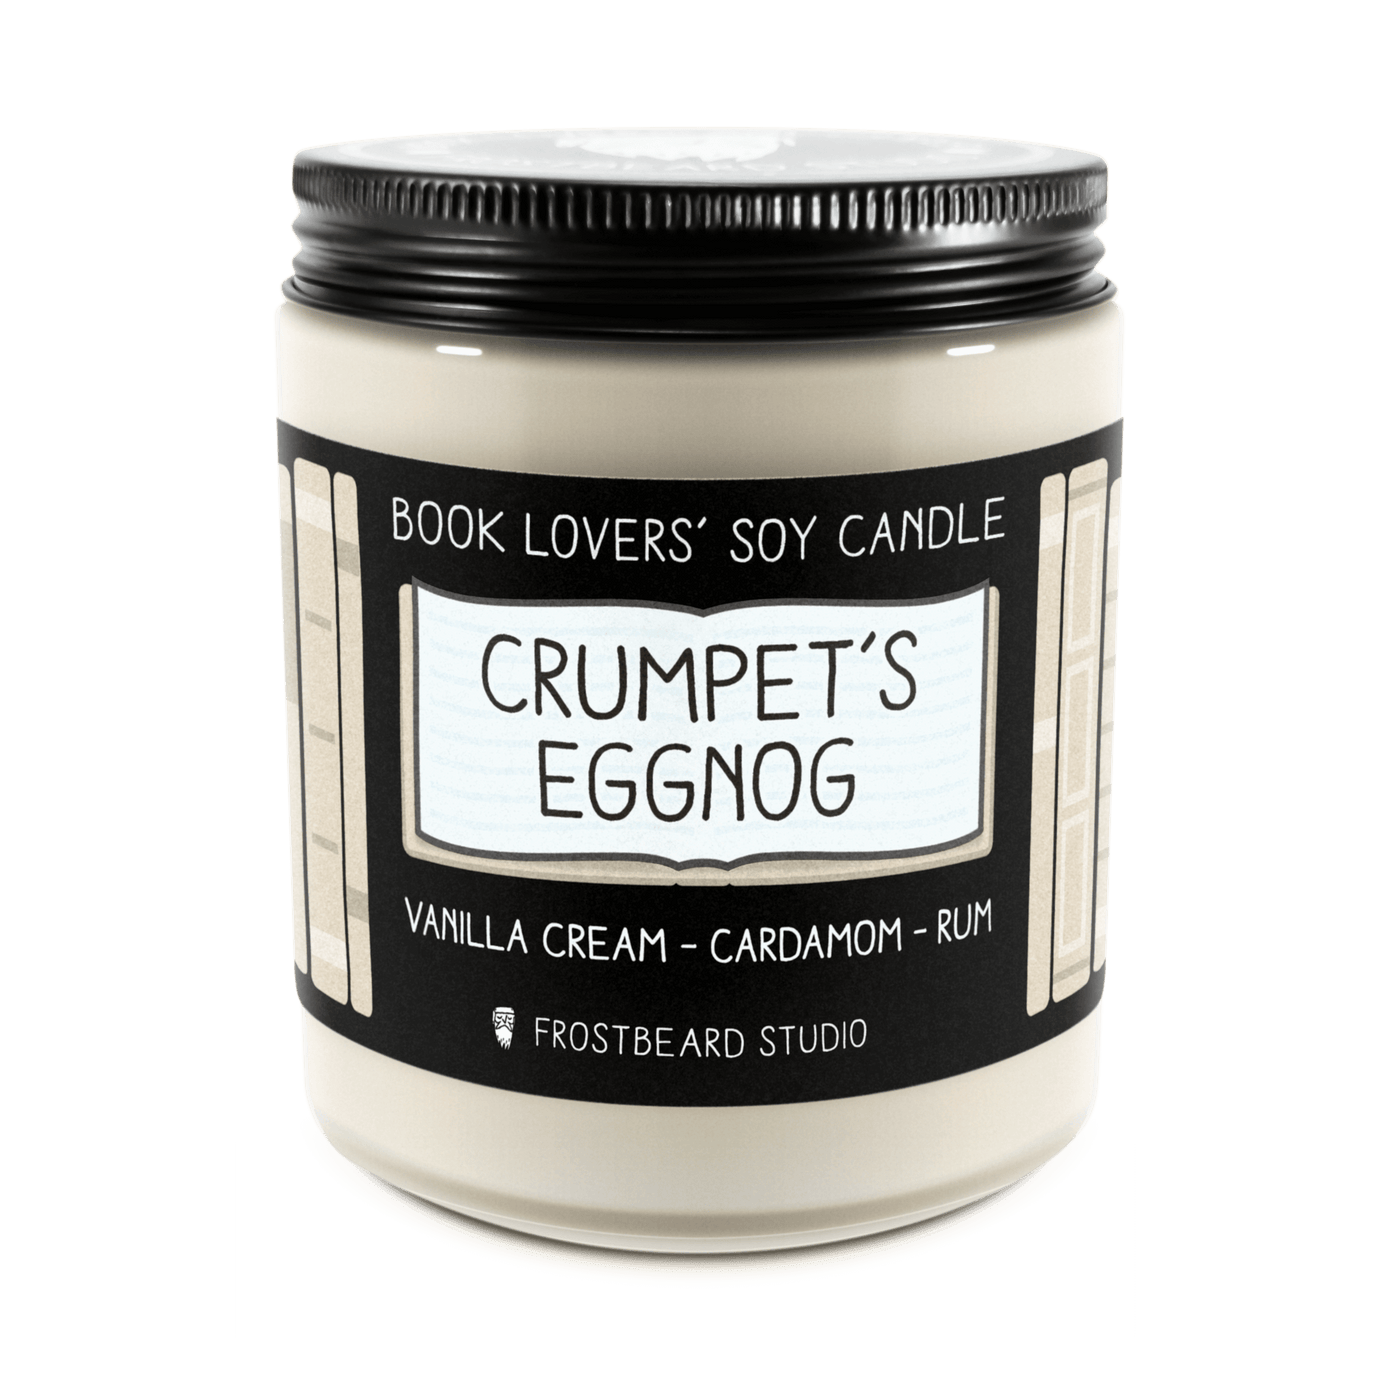 Crumpet's Eggnog  -  8 oz Jar  -  Book Lovers' Soy Candle  -  Frostbeard Studio